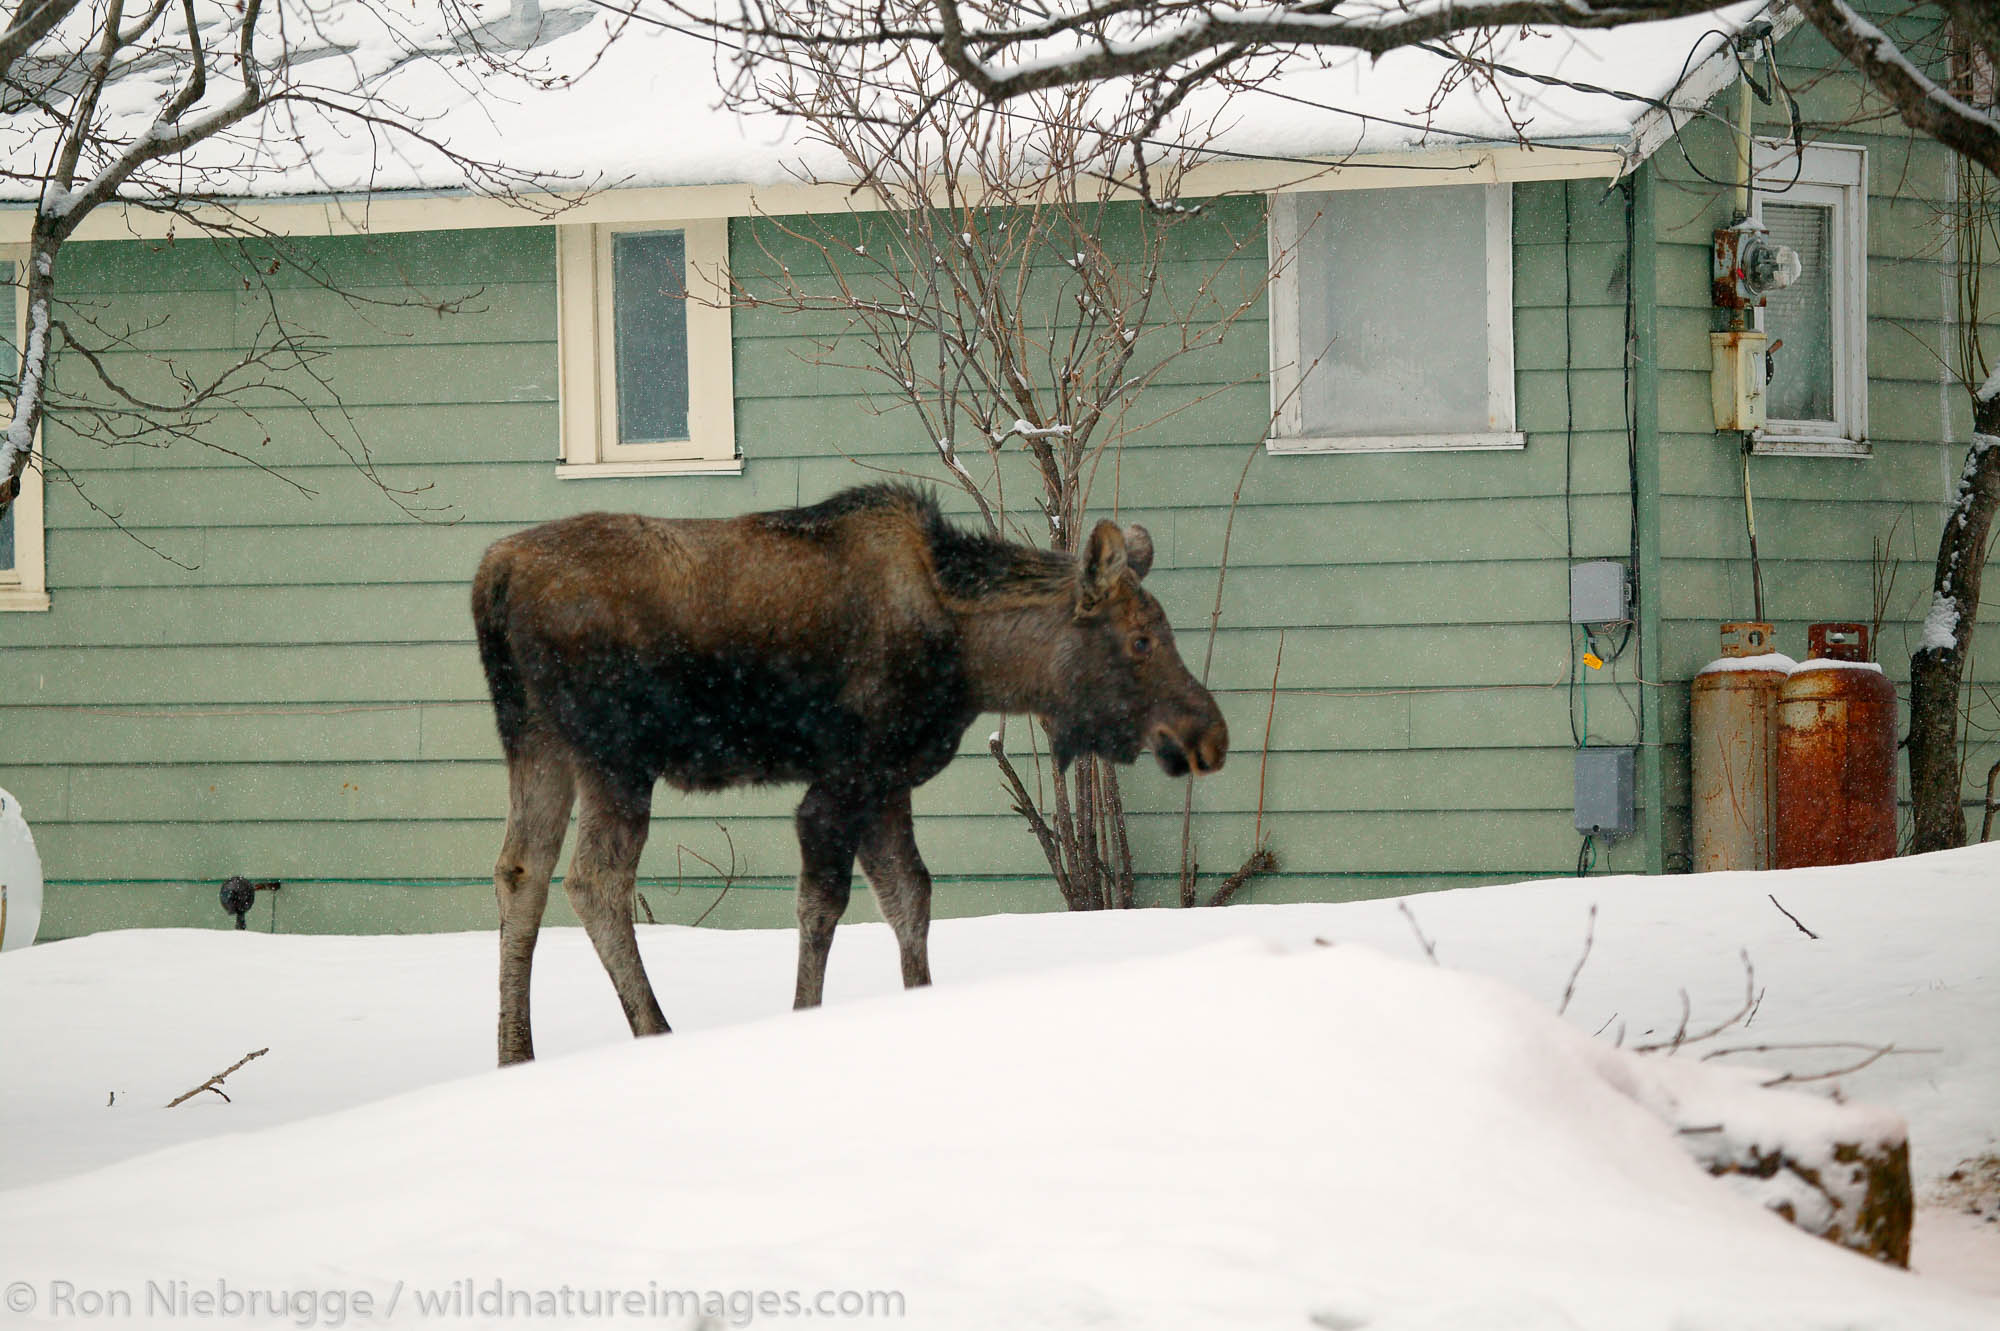 Moose in the backyard of a home, Seward, Alaska.